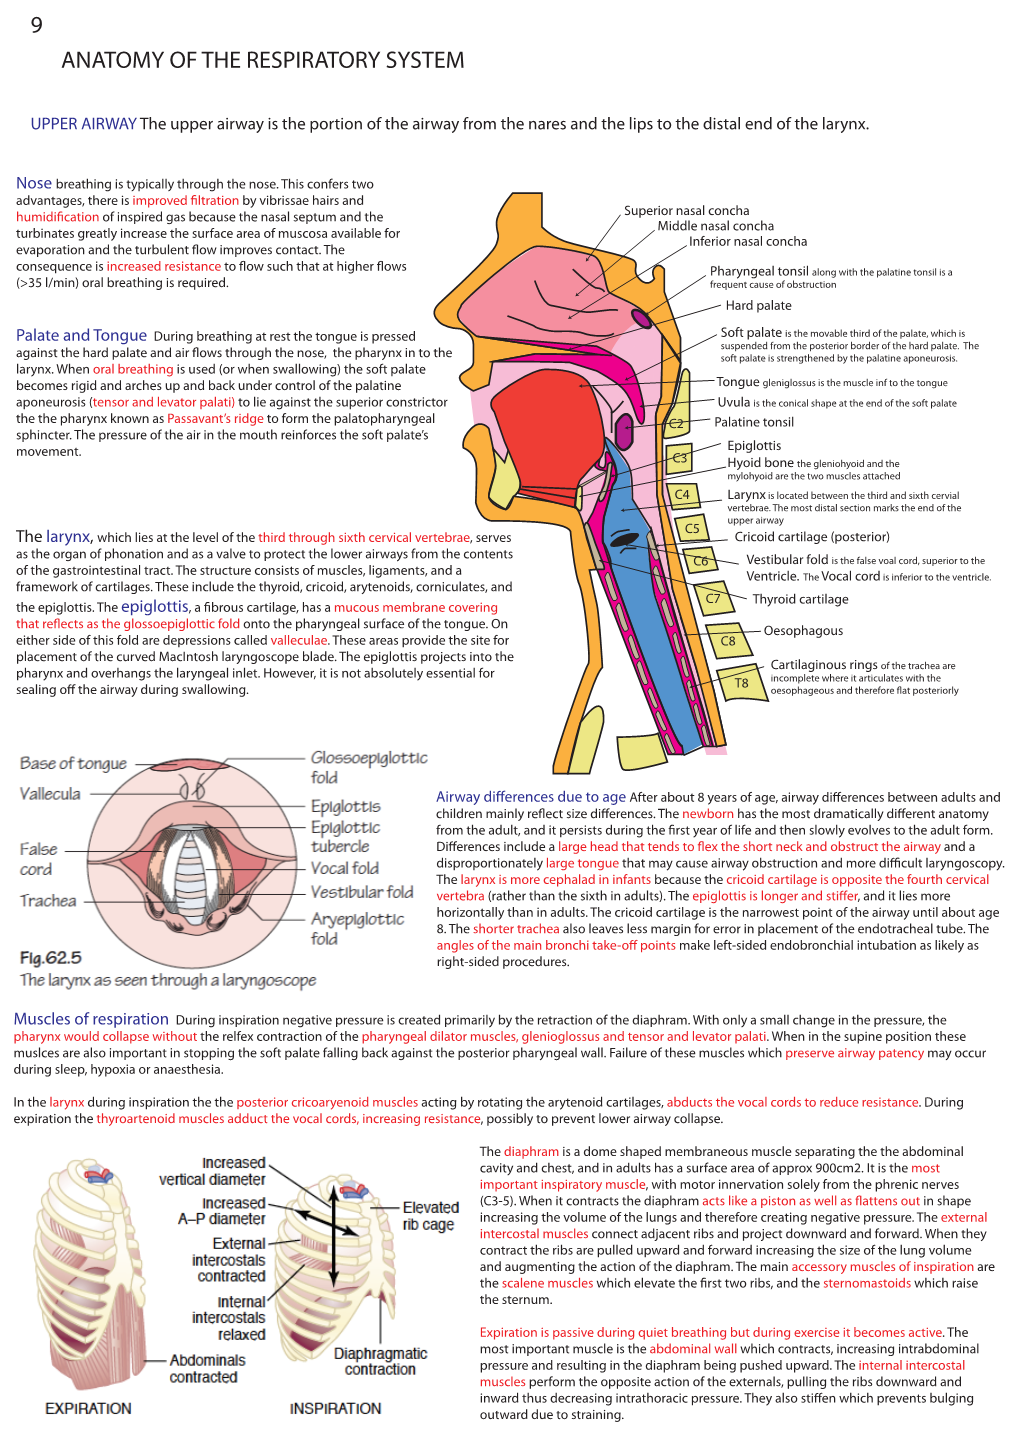 Anatomy of the Respiratory System 1